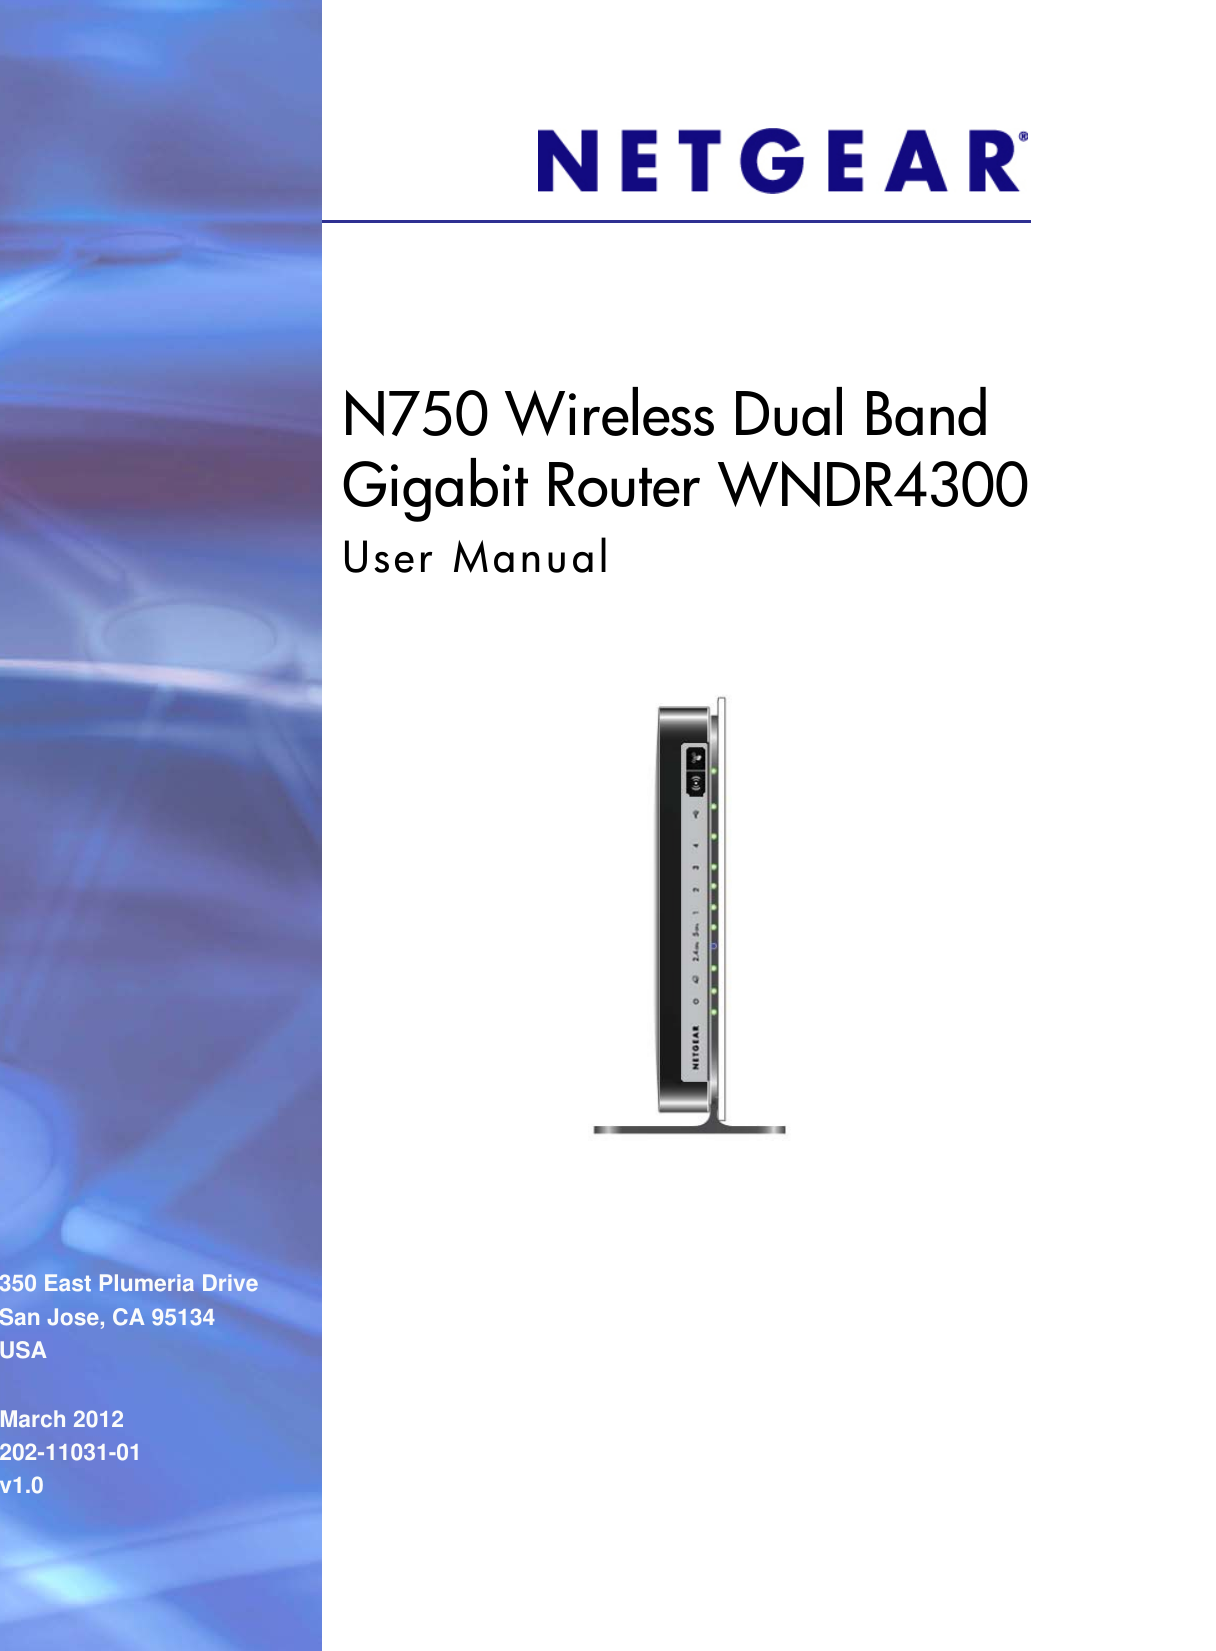 350 East Plumeria DriveSan Jose, CA 95134USAMarch 2012202-11031-01v1.0N750 Wireless Dual Band Gigabit Router WNDR4300User Manual